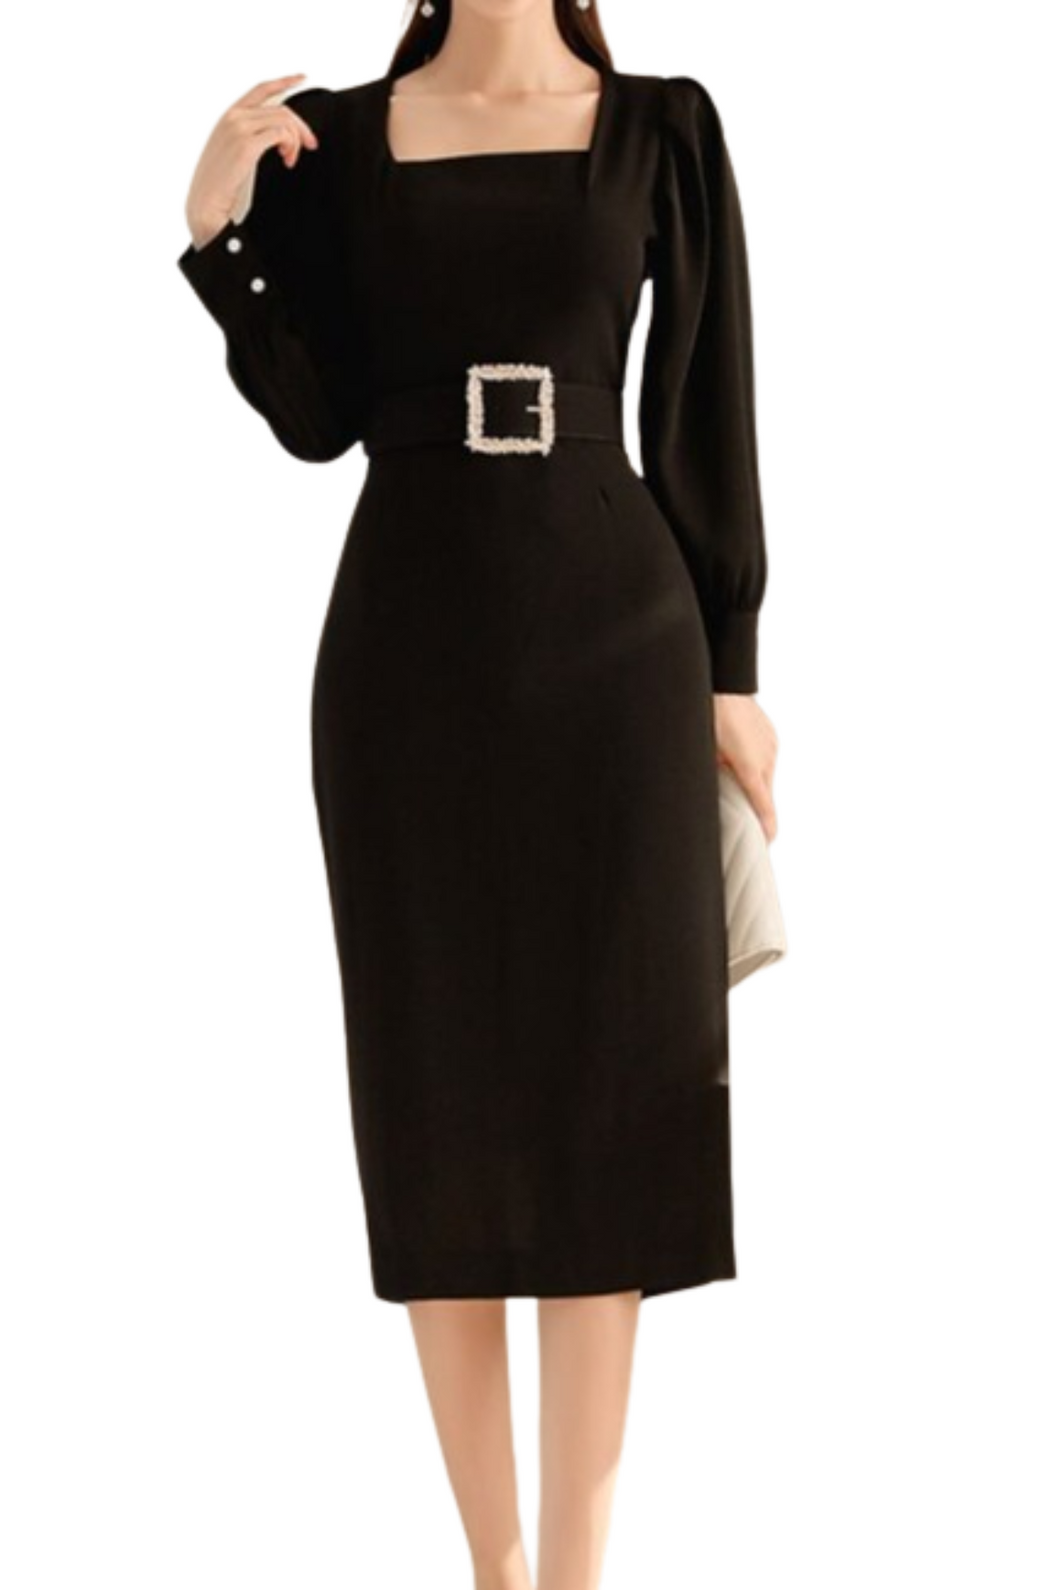 High Quality Long Sleeves Bodycon Office Black Elegant Dress